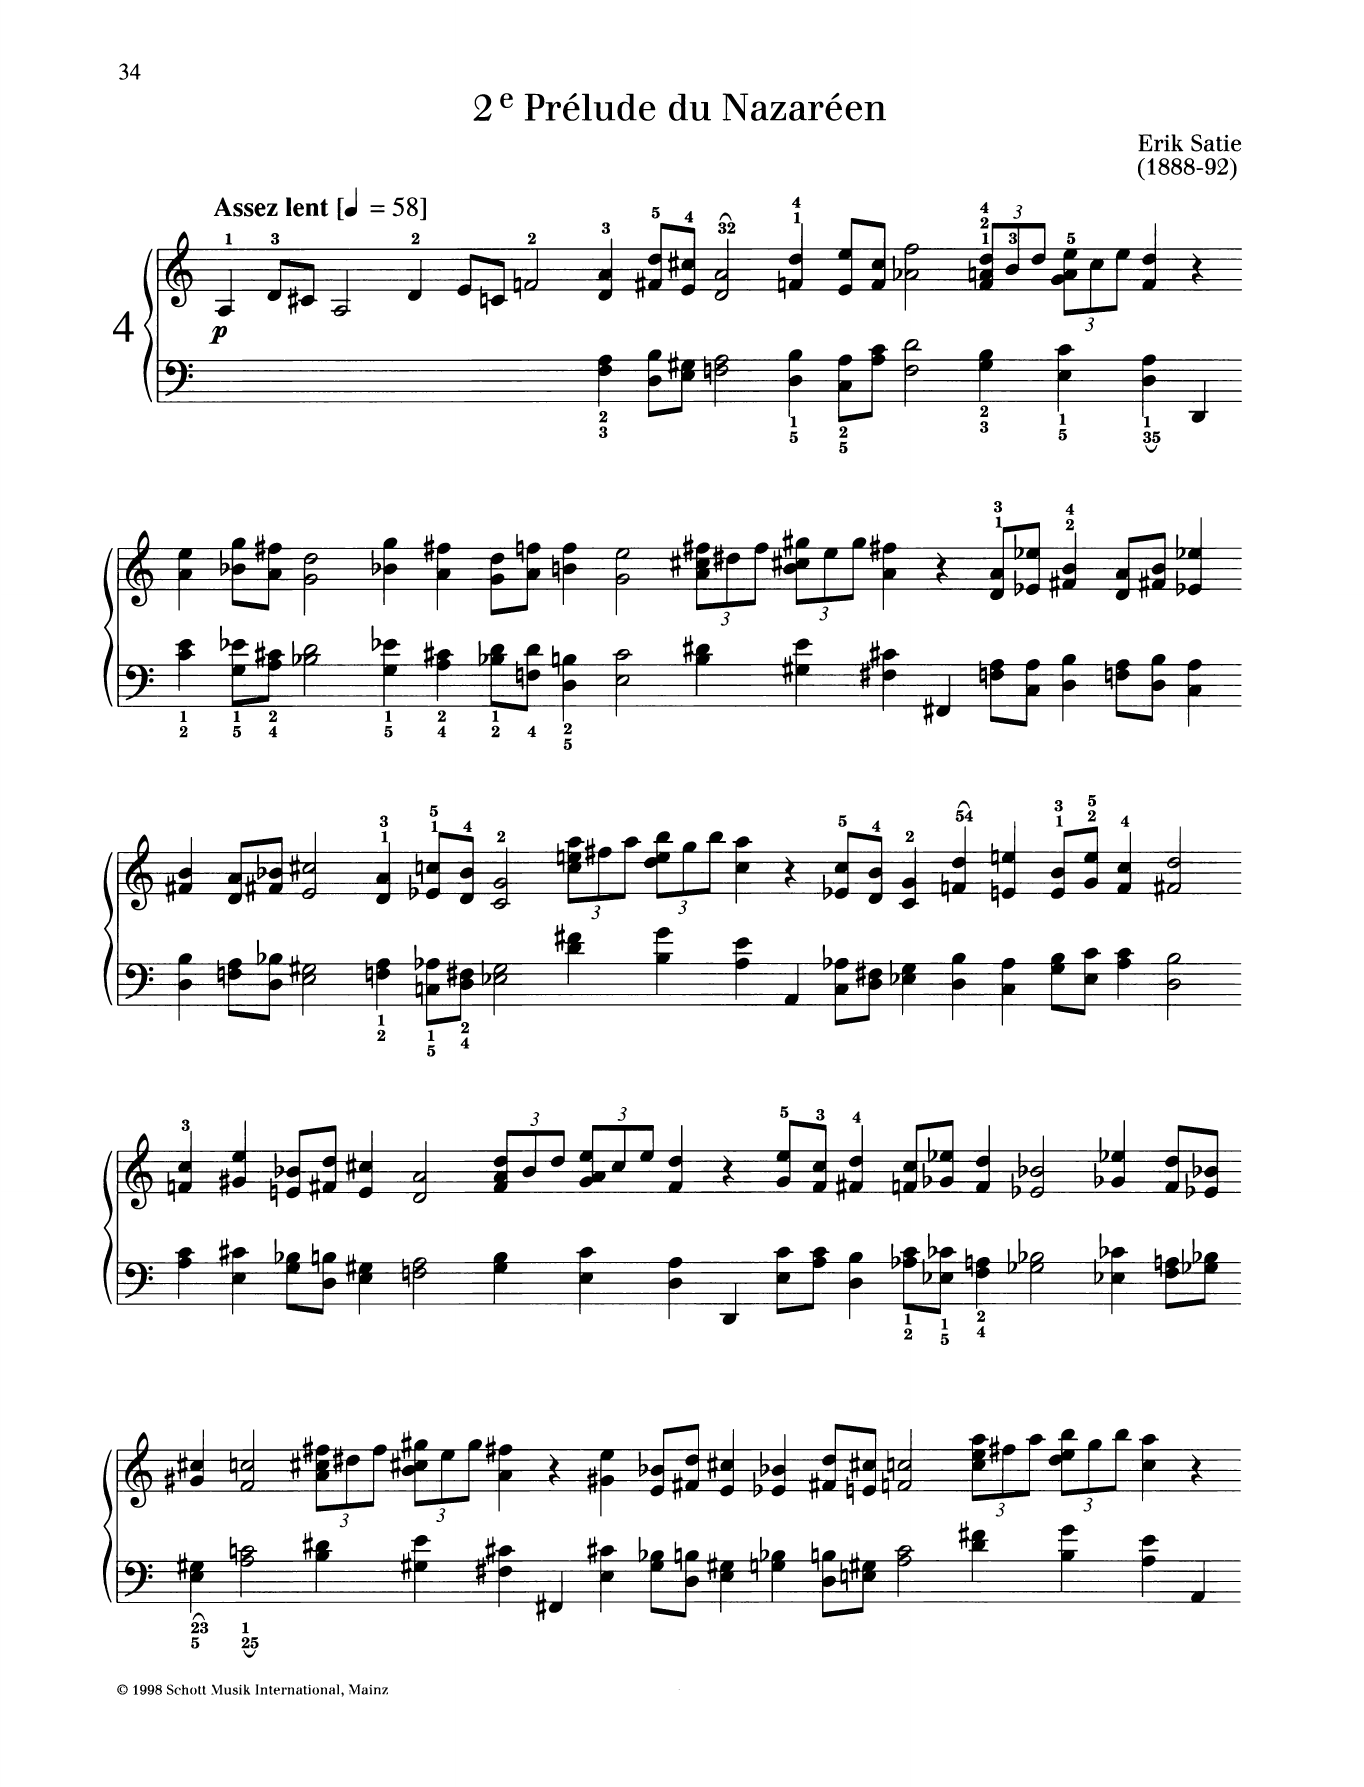 Erik Satie 2e Prelude du Nazareen sheet music notes and chords arranged for Piano Solo